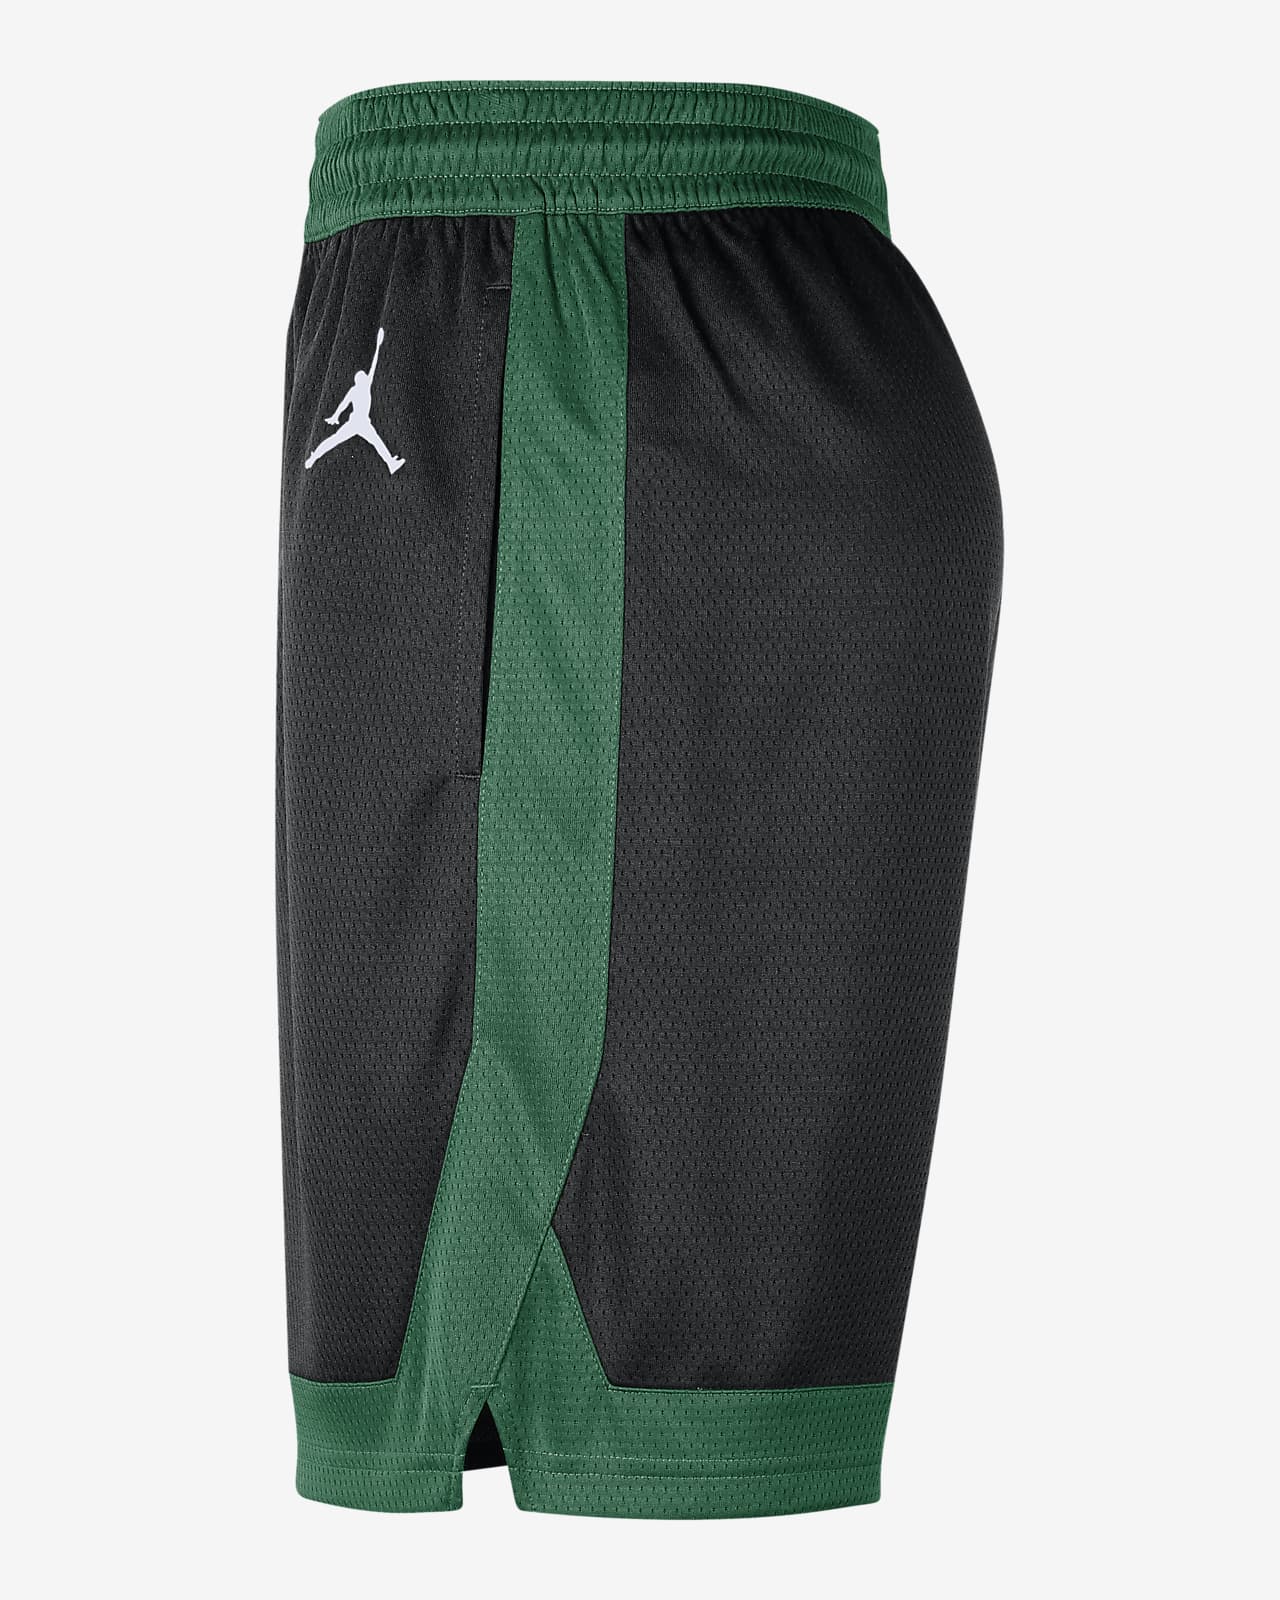 Boston Celtics Shorts, Celtics Basketball Shorts, Running Shorts